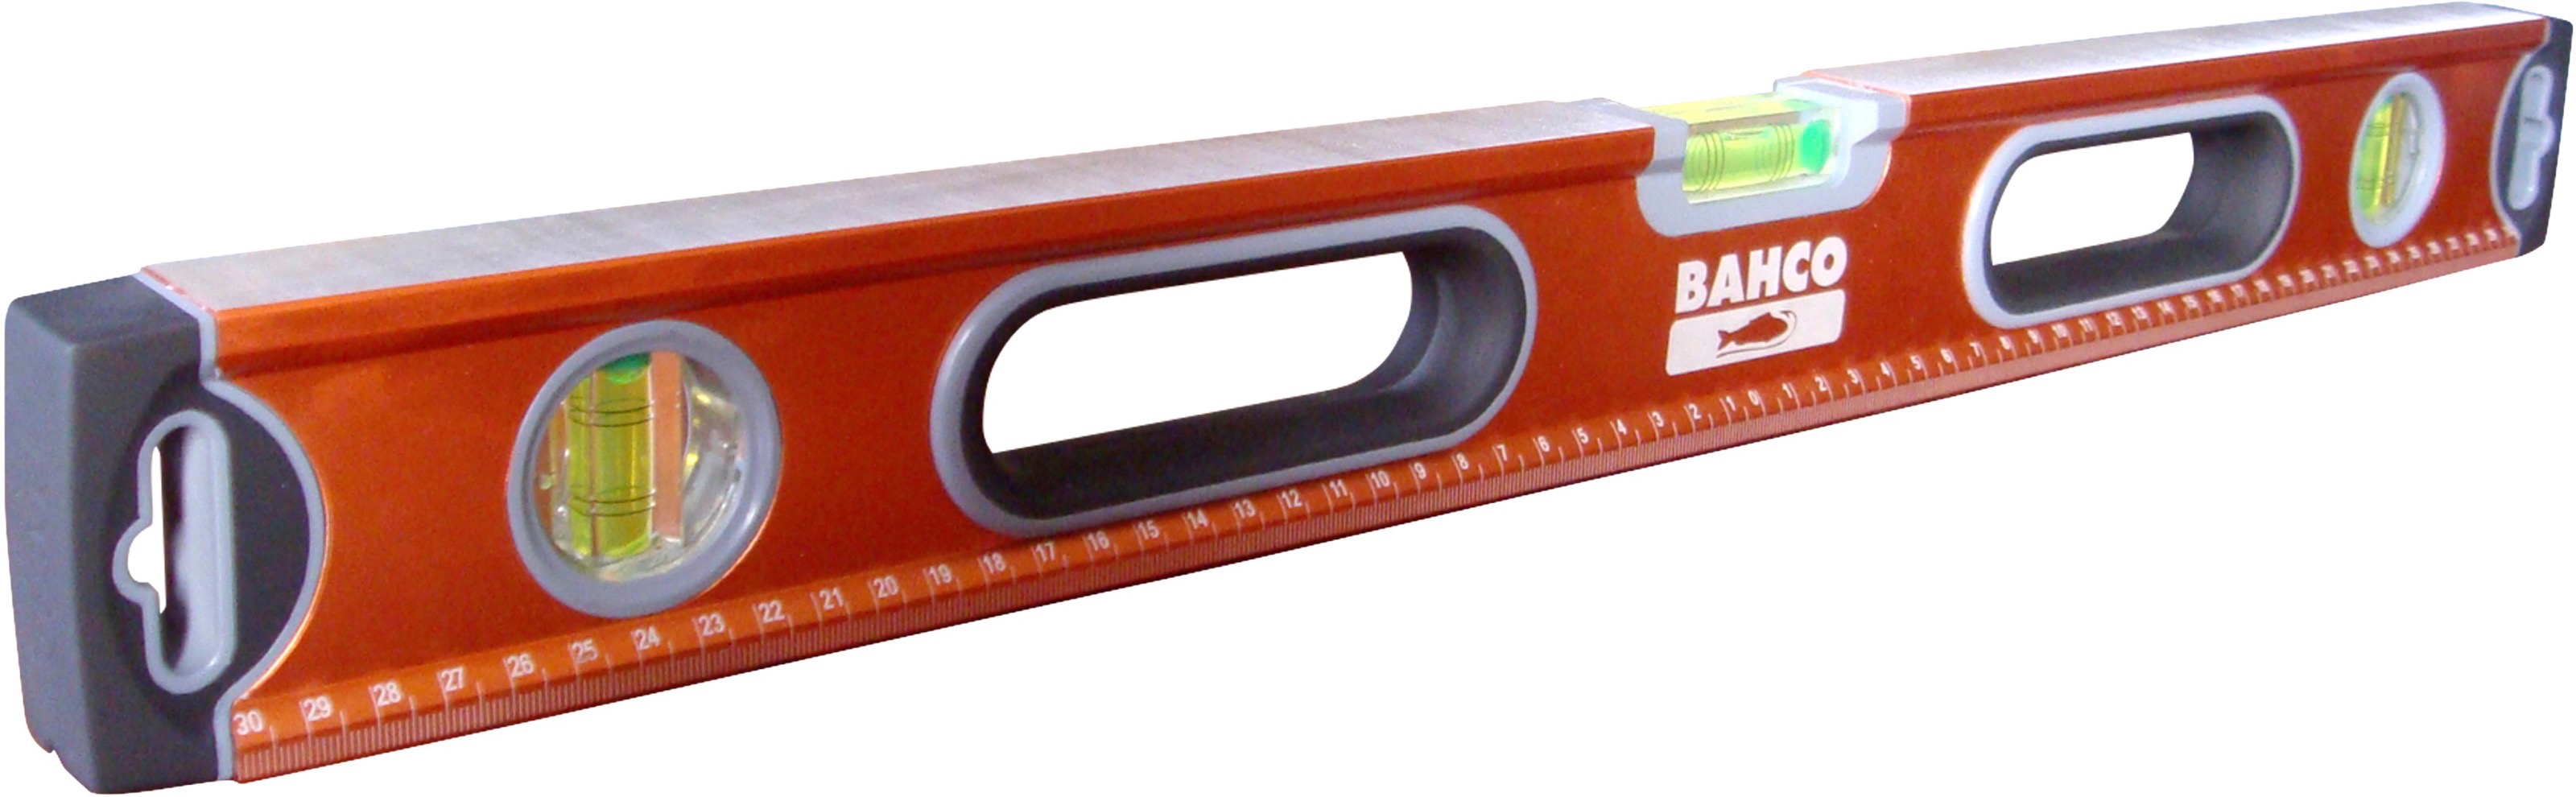 Produkt miniatyrebild Bahco vater 1200mm 3 libeller 466-1200